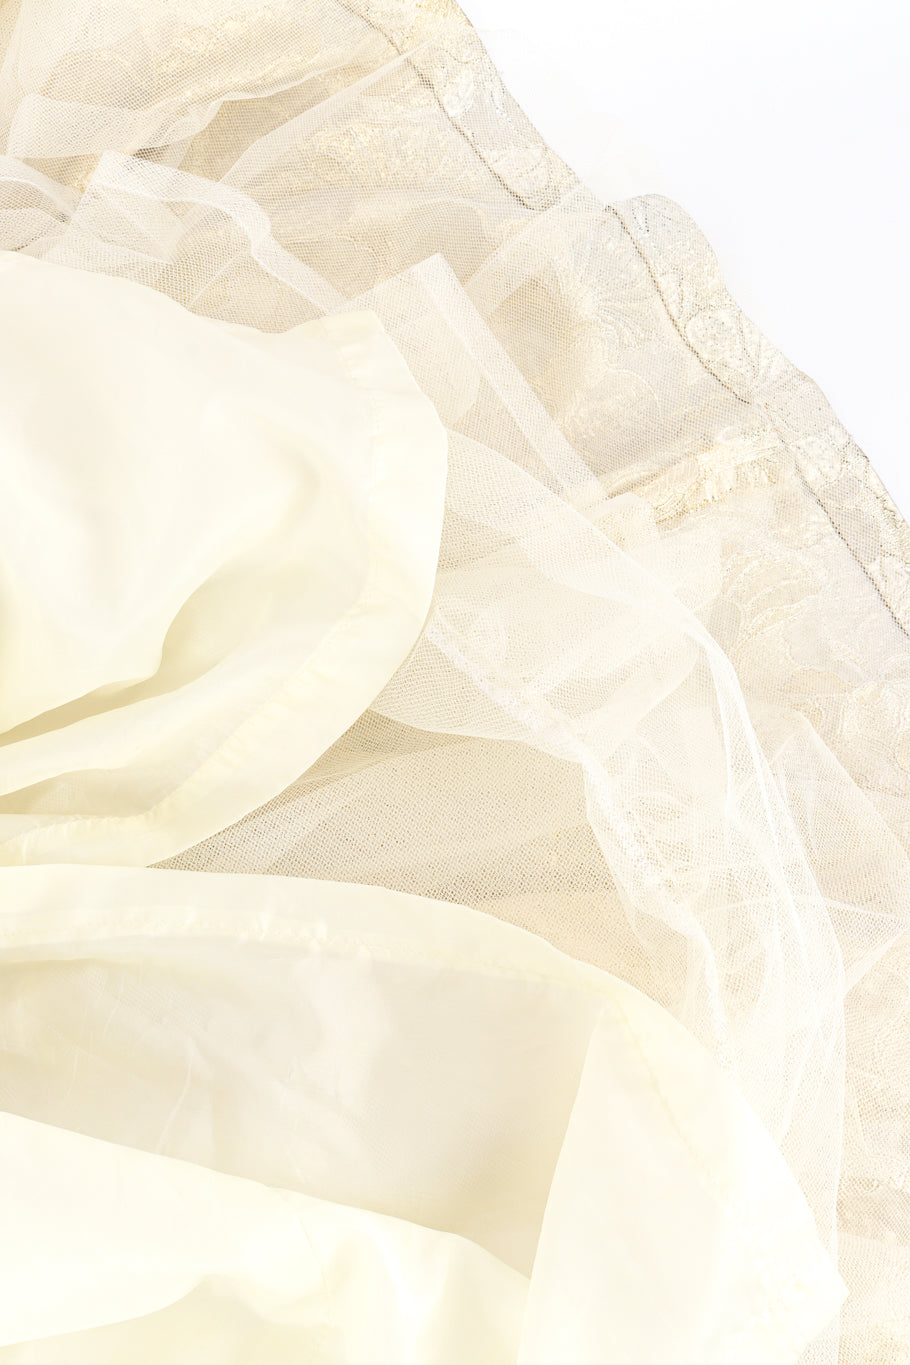 Vintage Victor Costa Strapless Floral Lamé Gown tulle petticoat flat closeup @recess la